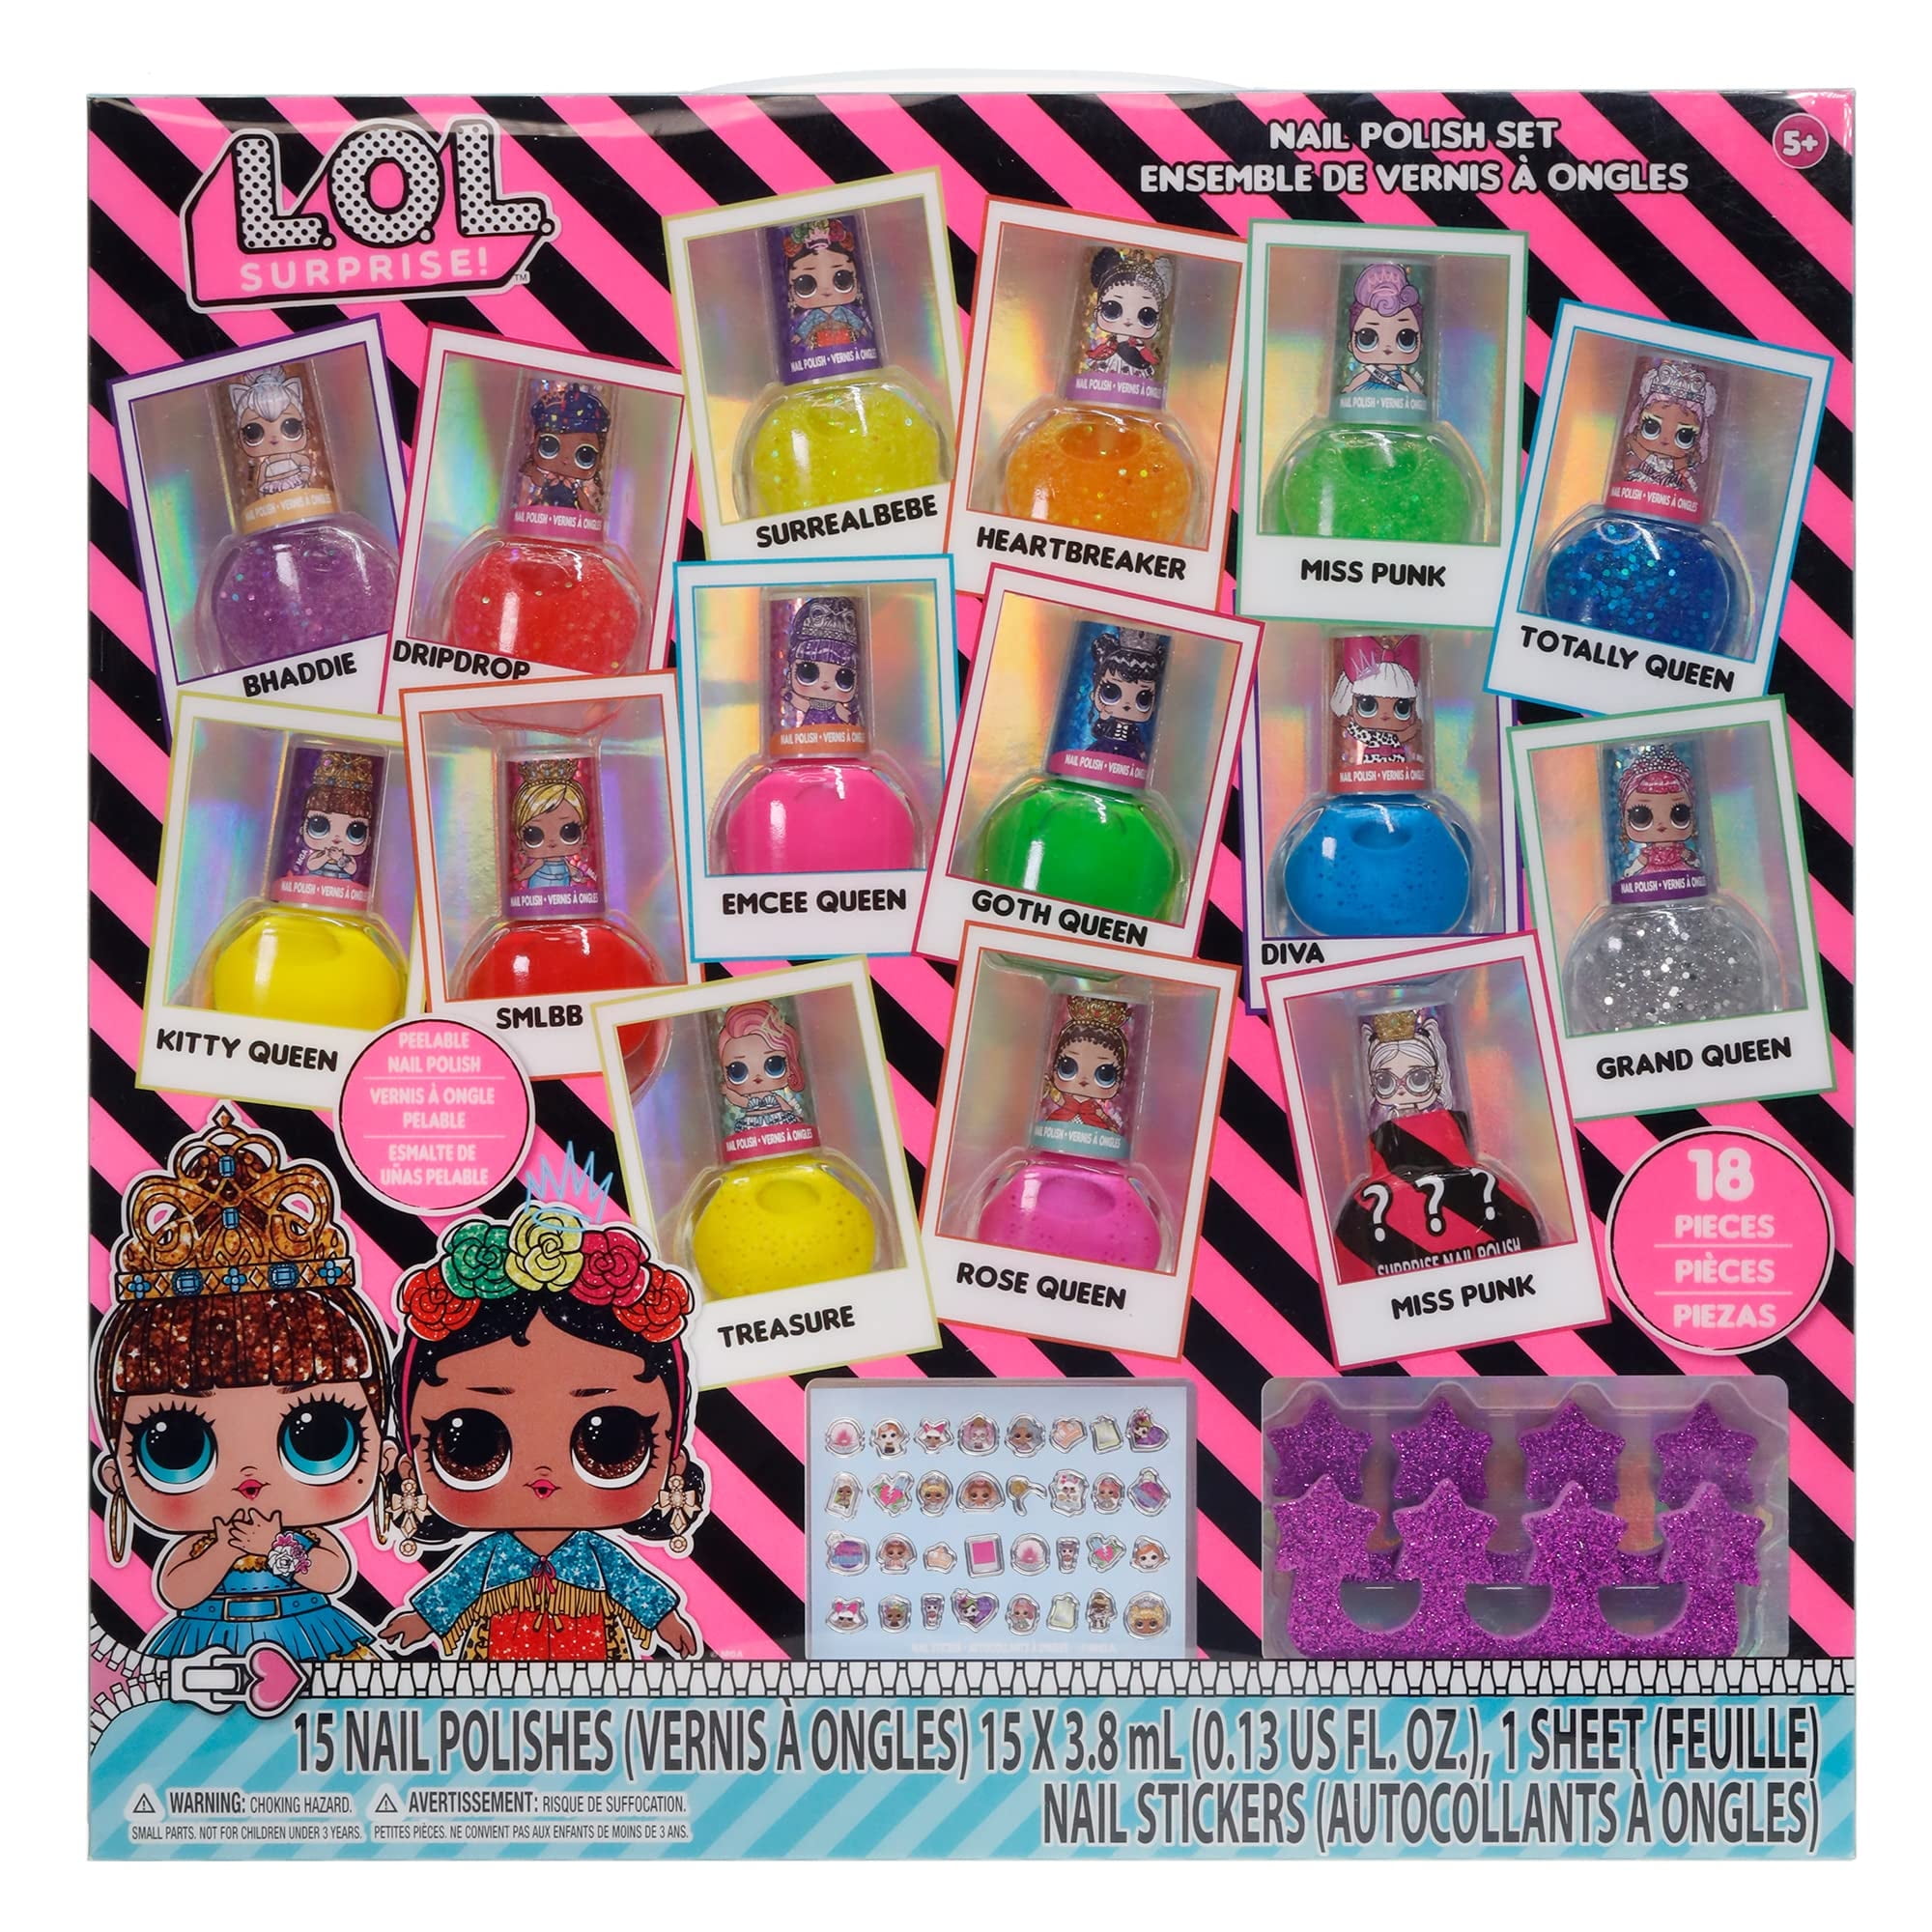  Hot Focus Sparkling Unicorn Nail Art Kit (80+ PCS) - Kids Nail  Polish Set for Girls Ages 5 6 7-12, Scented, Pink & Blue Glitter, Stickers,  File - Girls Spa